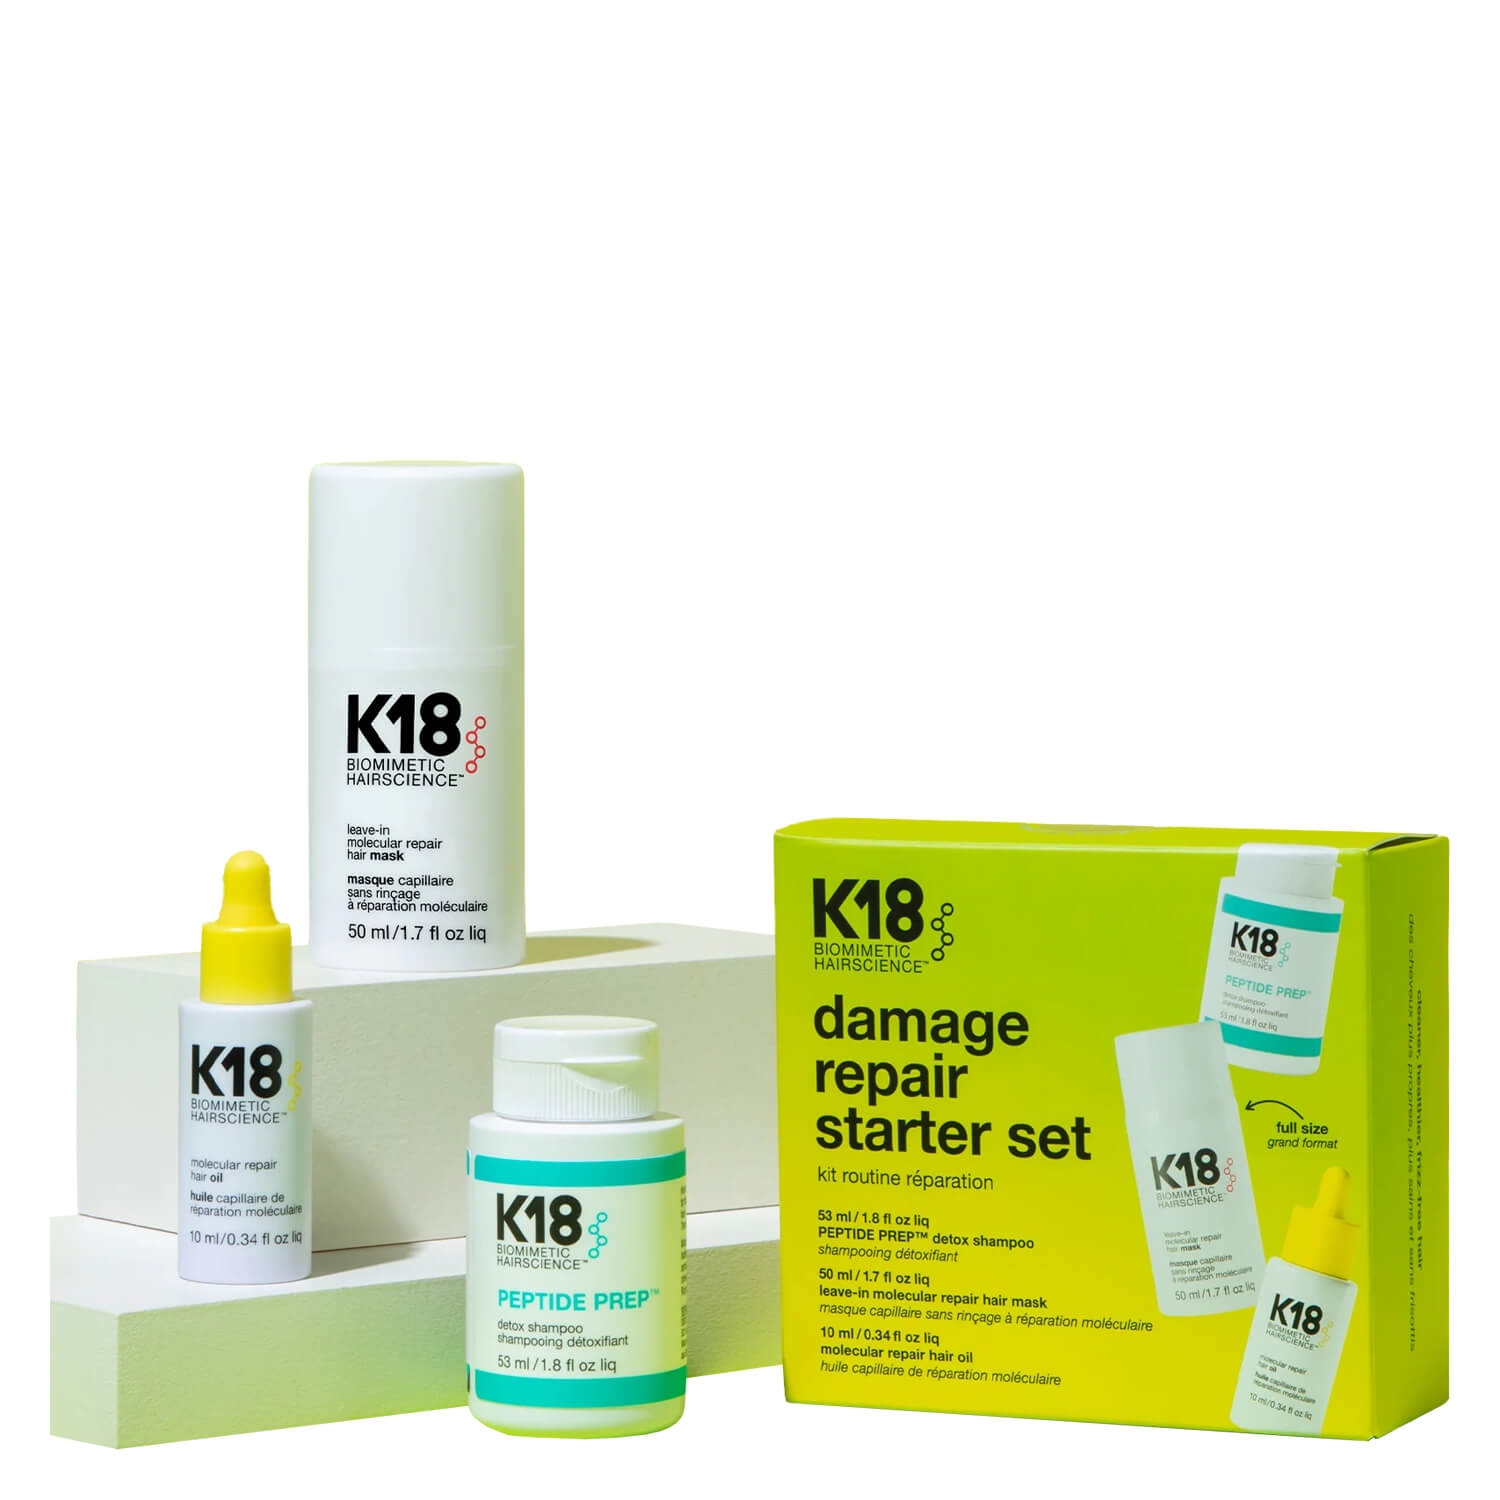 Product image from K18 Biomimetic Hairscience - damage repair starter set